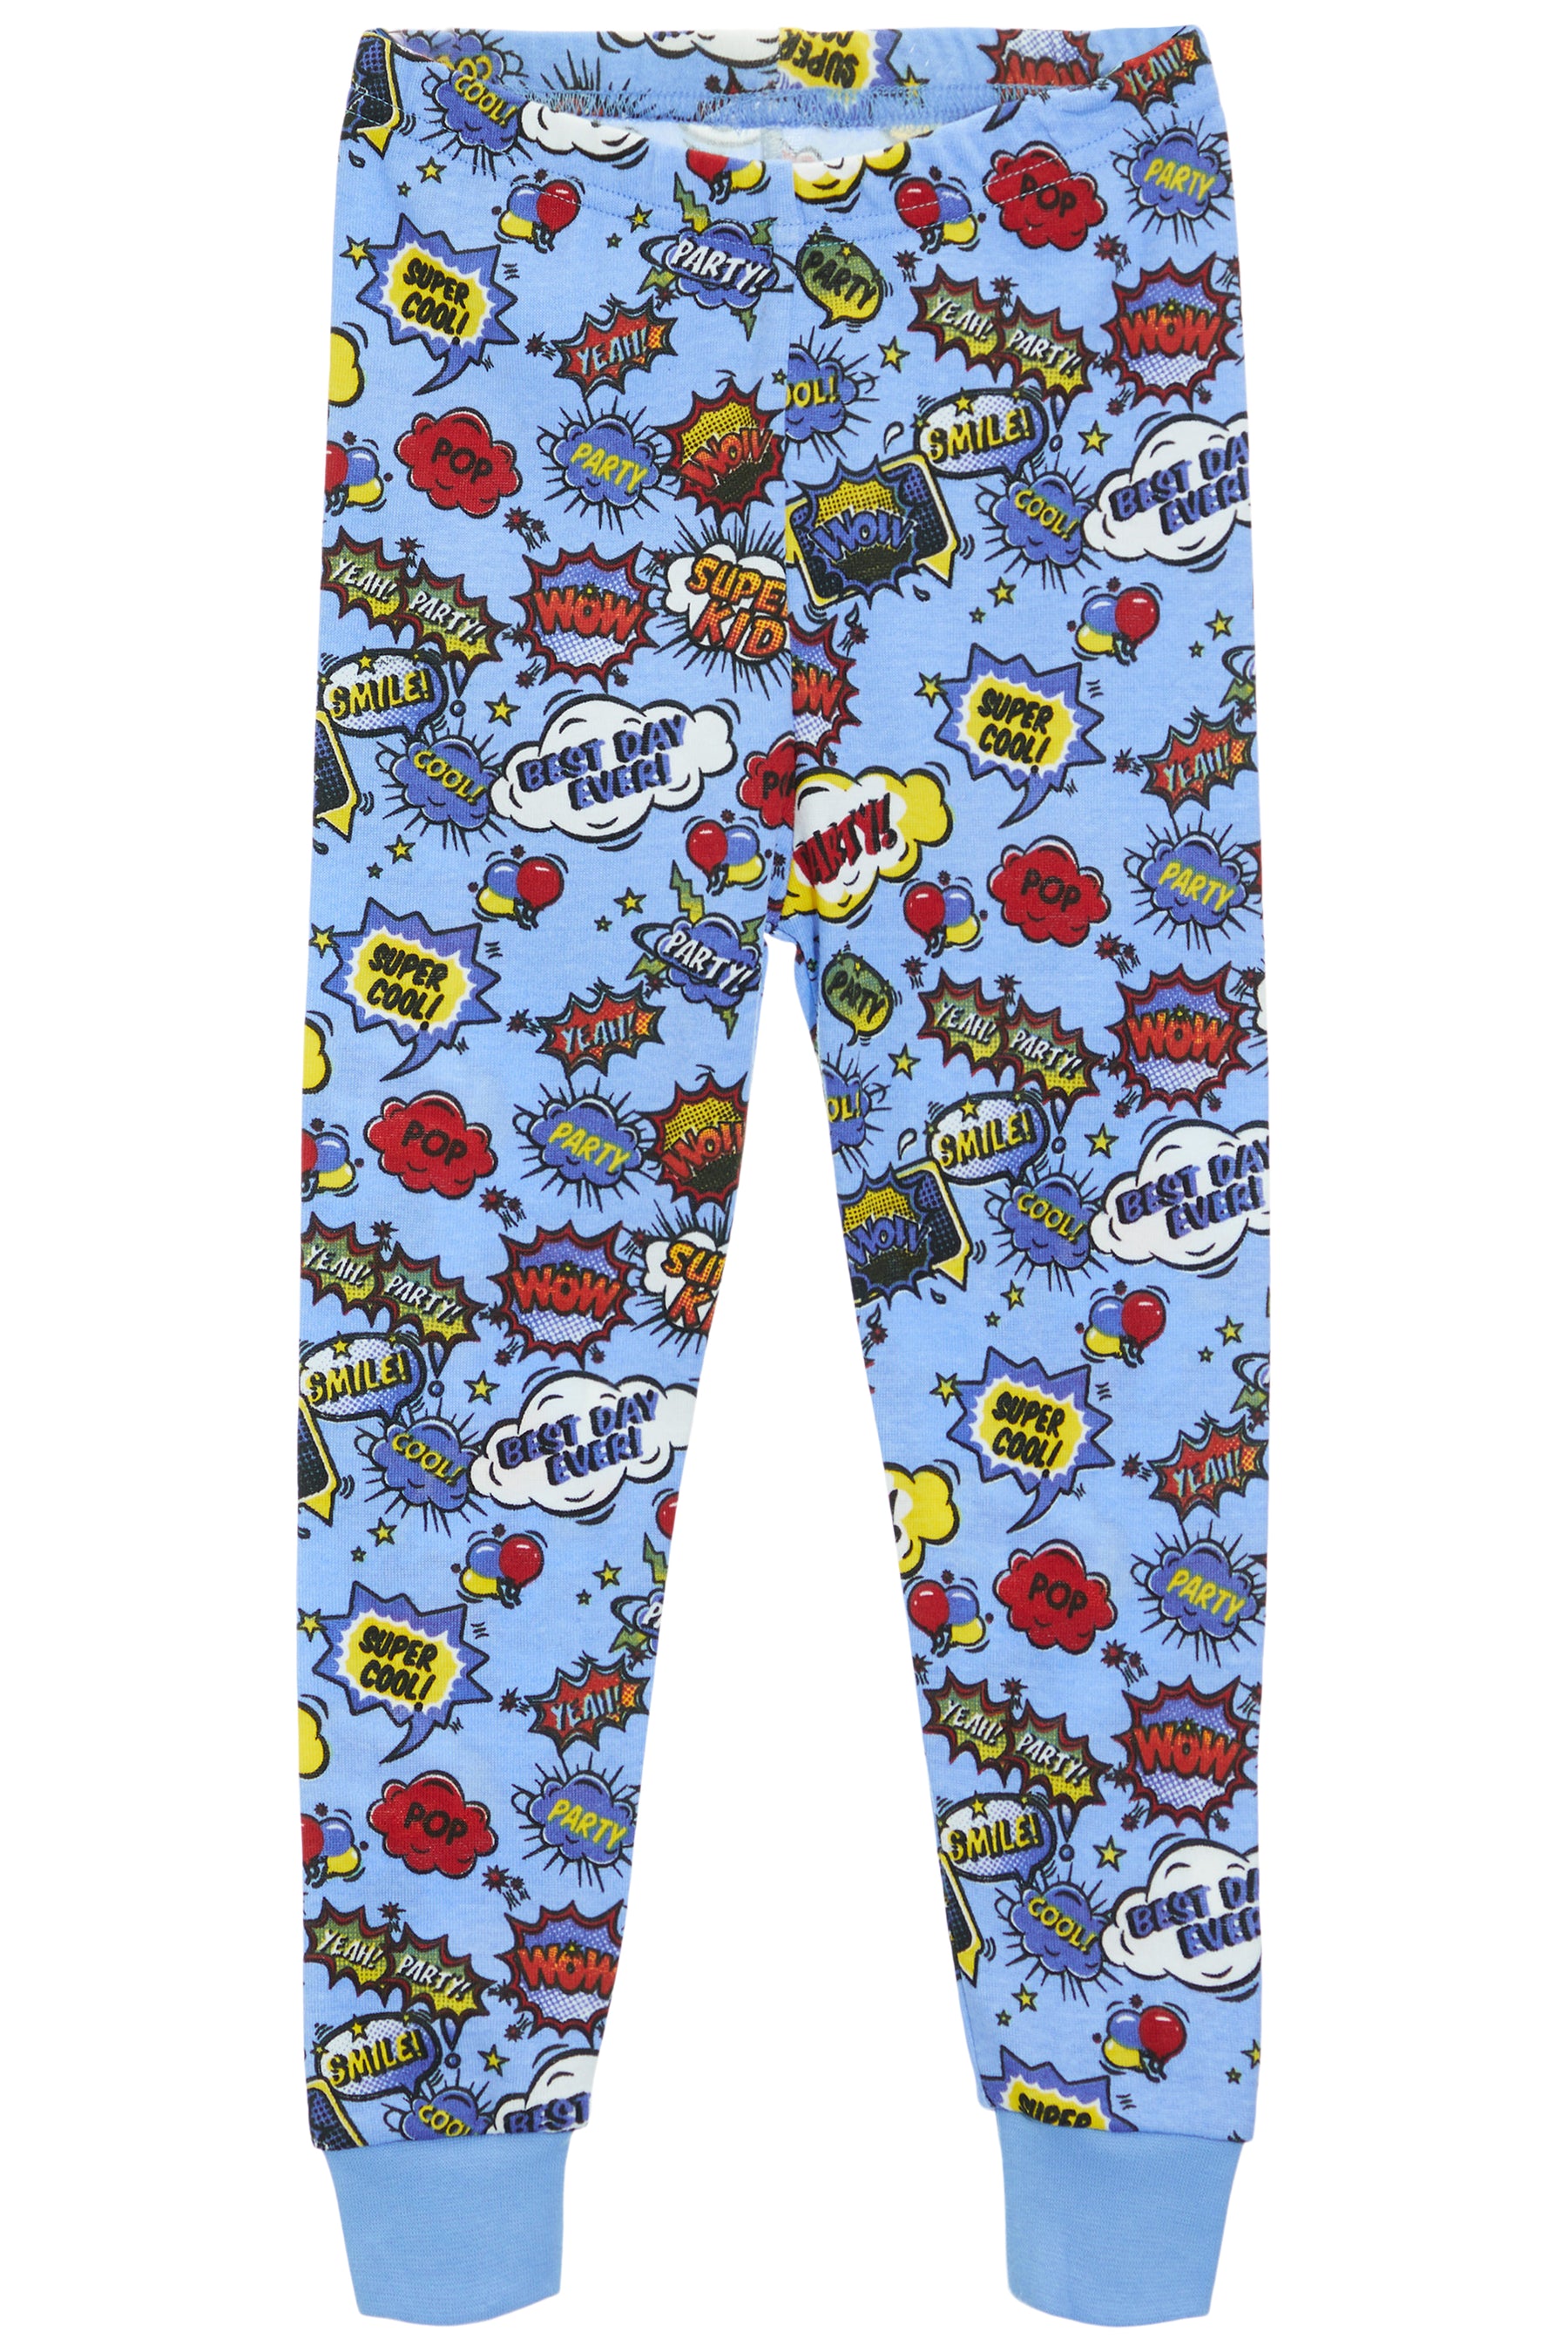 Comic Party Two Piece Pajama Set